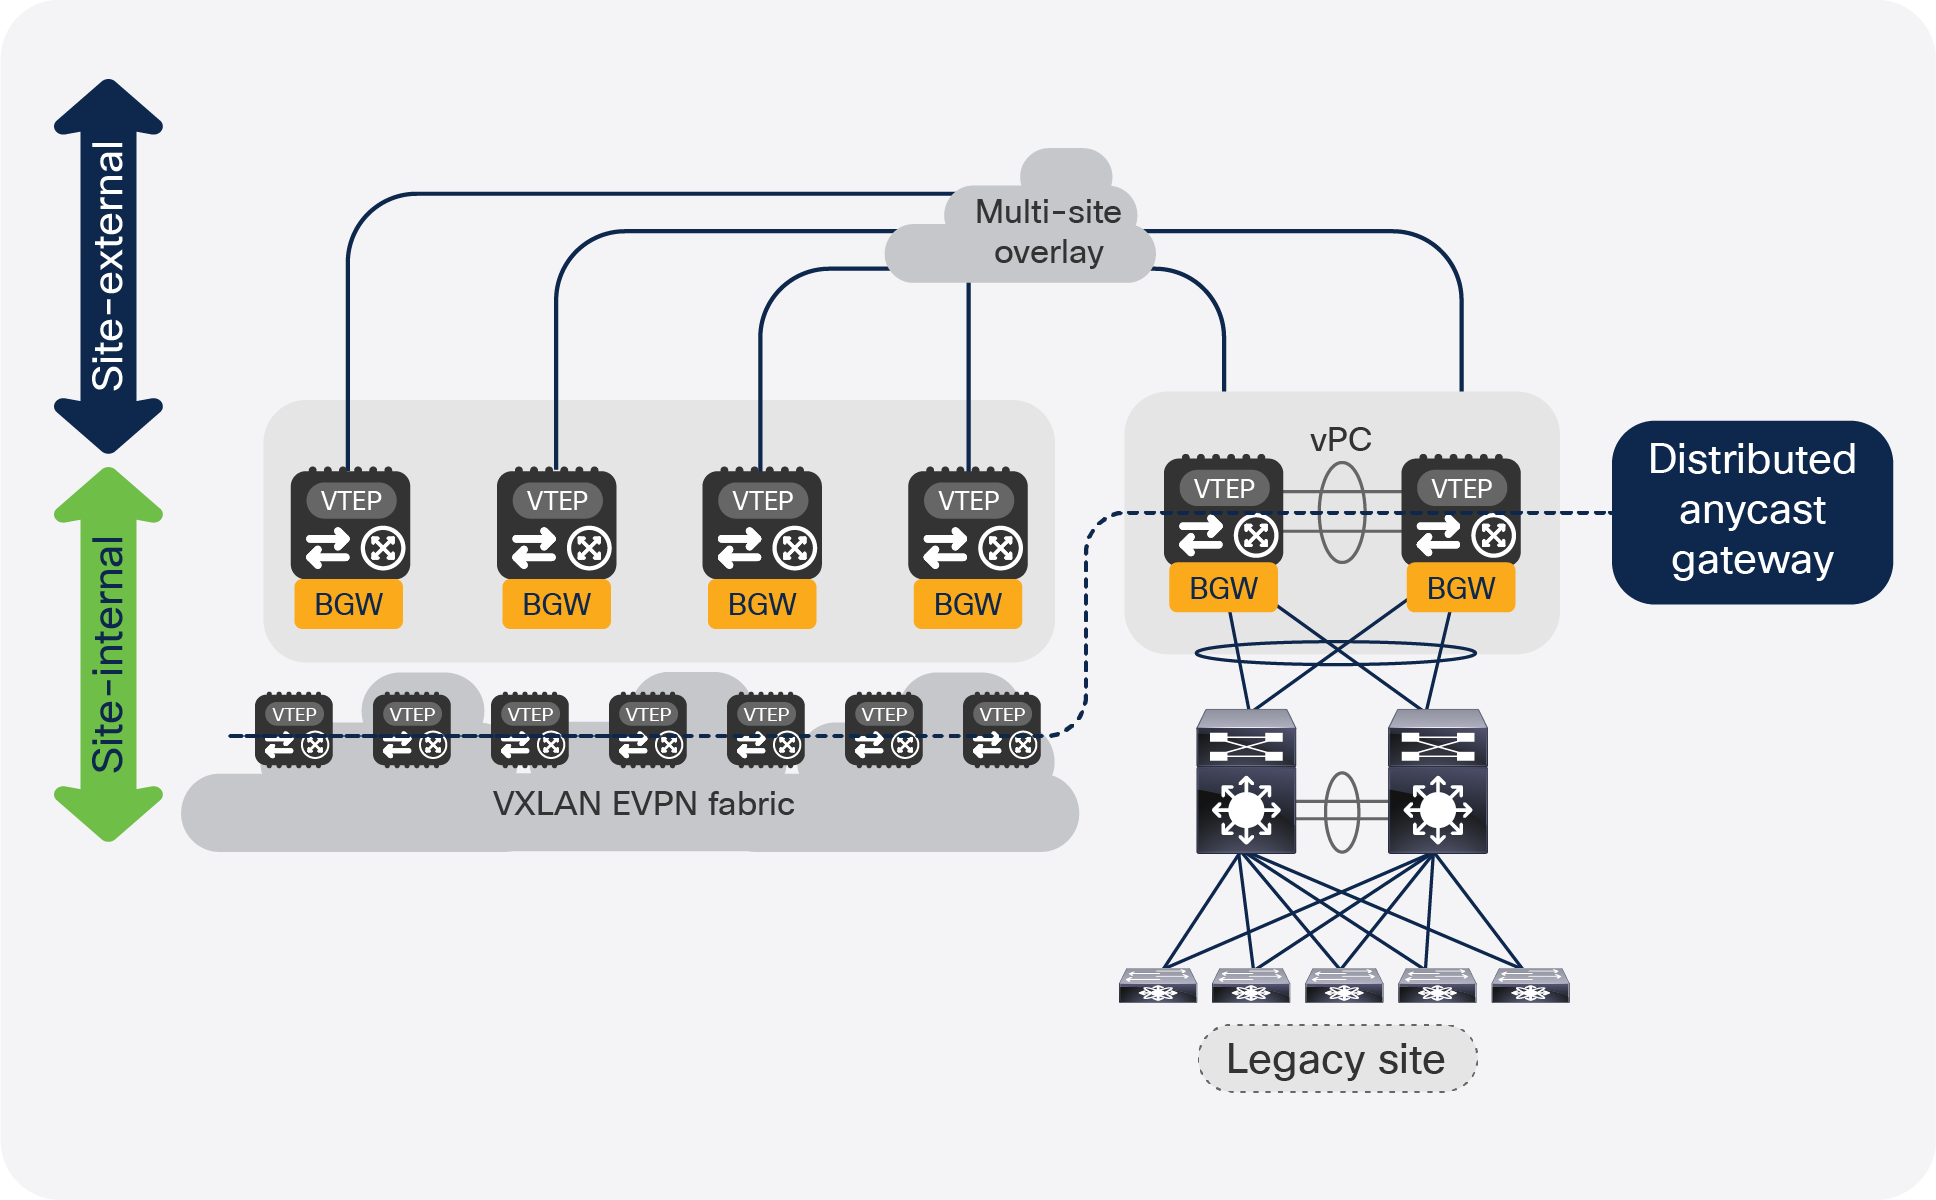 VXLAN EVPN Multi-Site for integrating with legacy networks